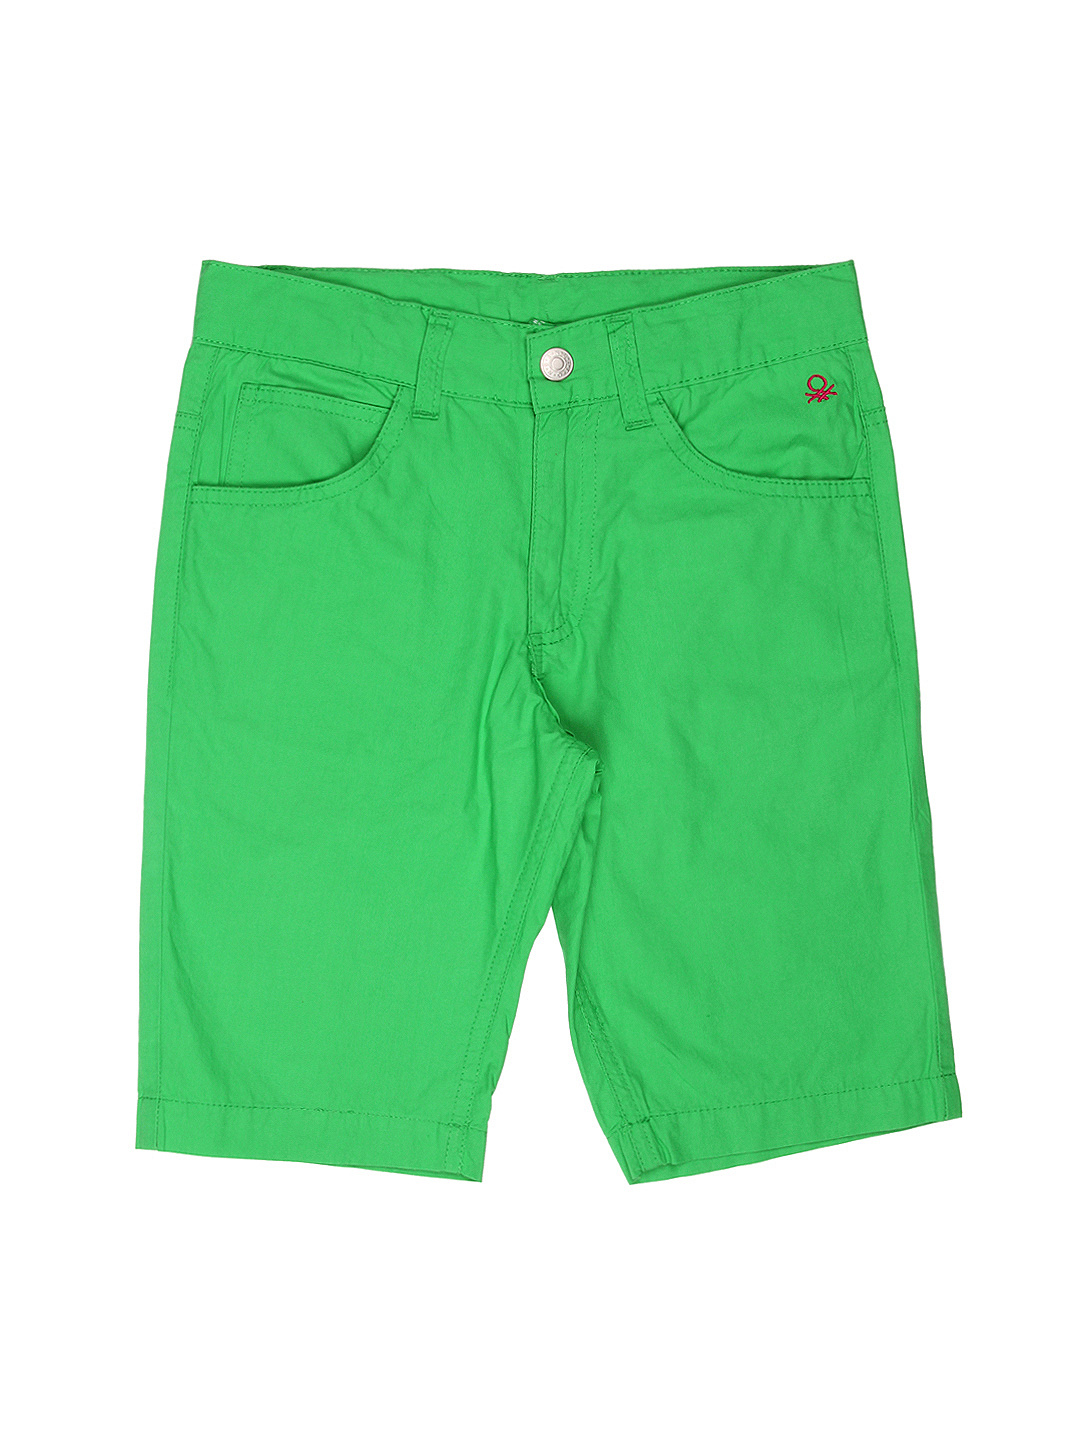 Cartoon Pair Of Shorts United Colors Benetton Boys Green 